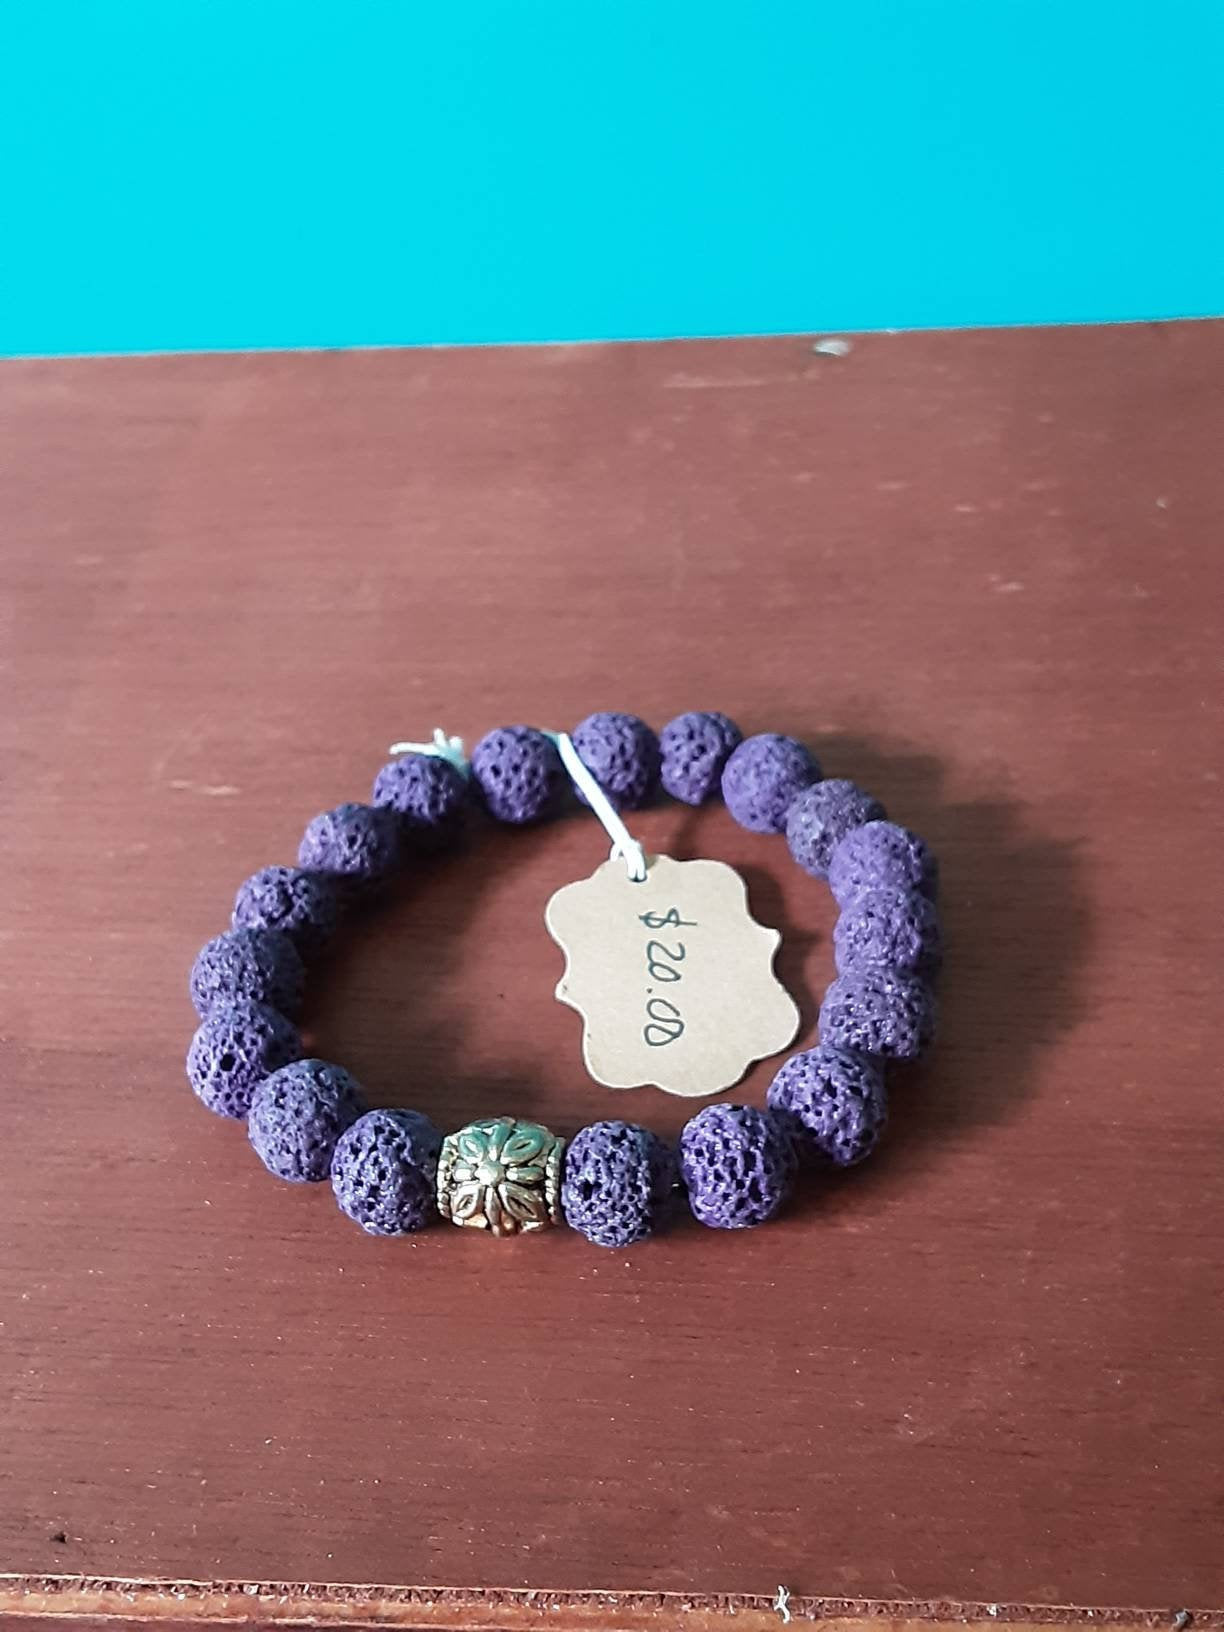 Purple Lava Bead Bracelet